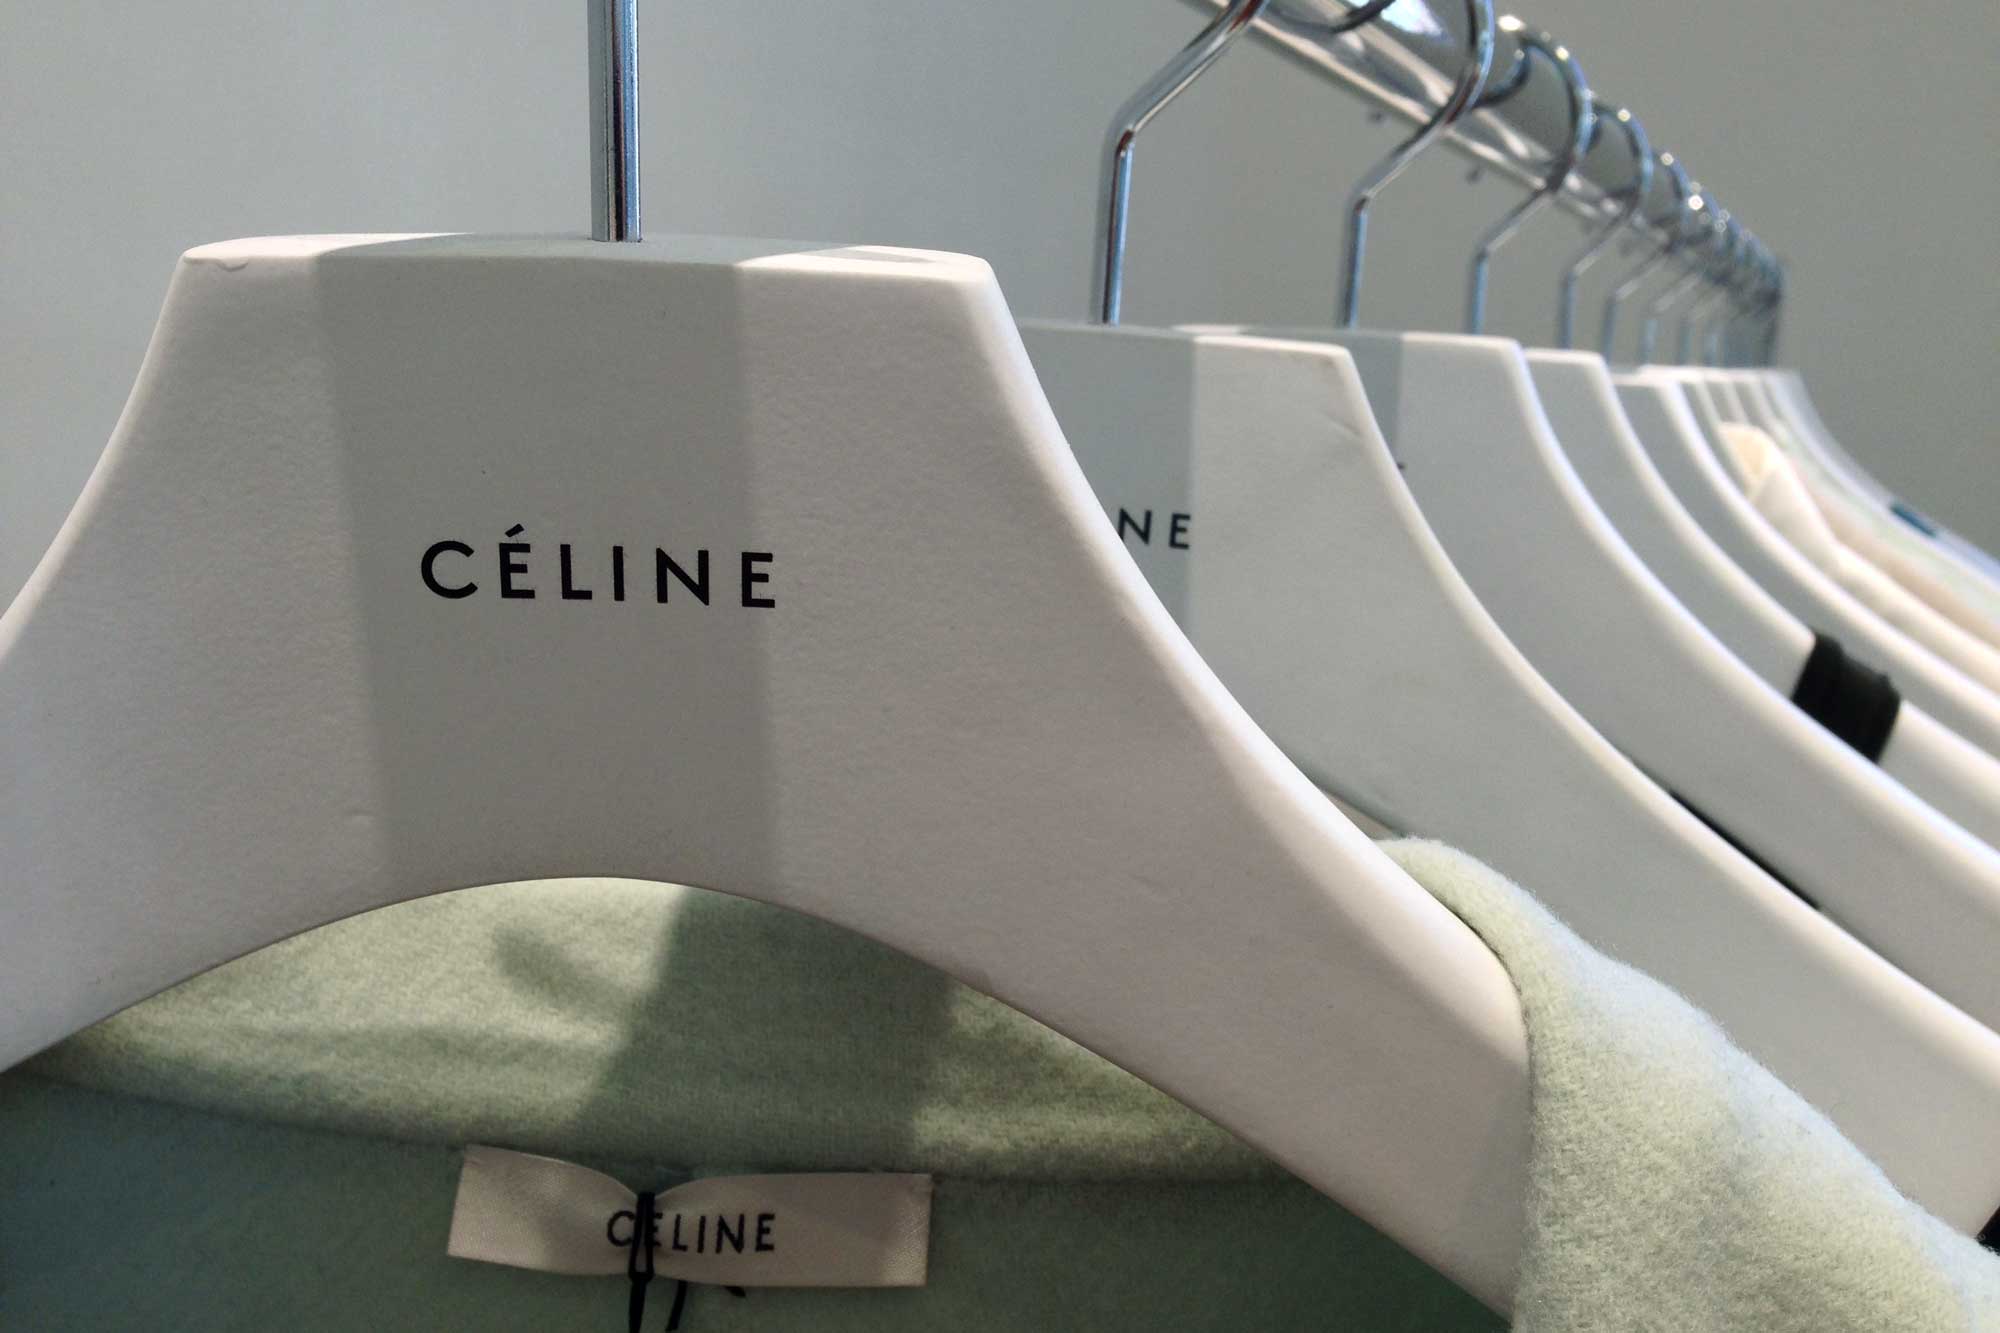 Céline - A visit to the store